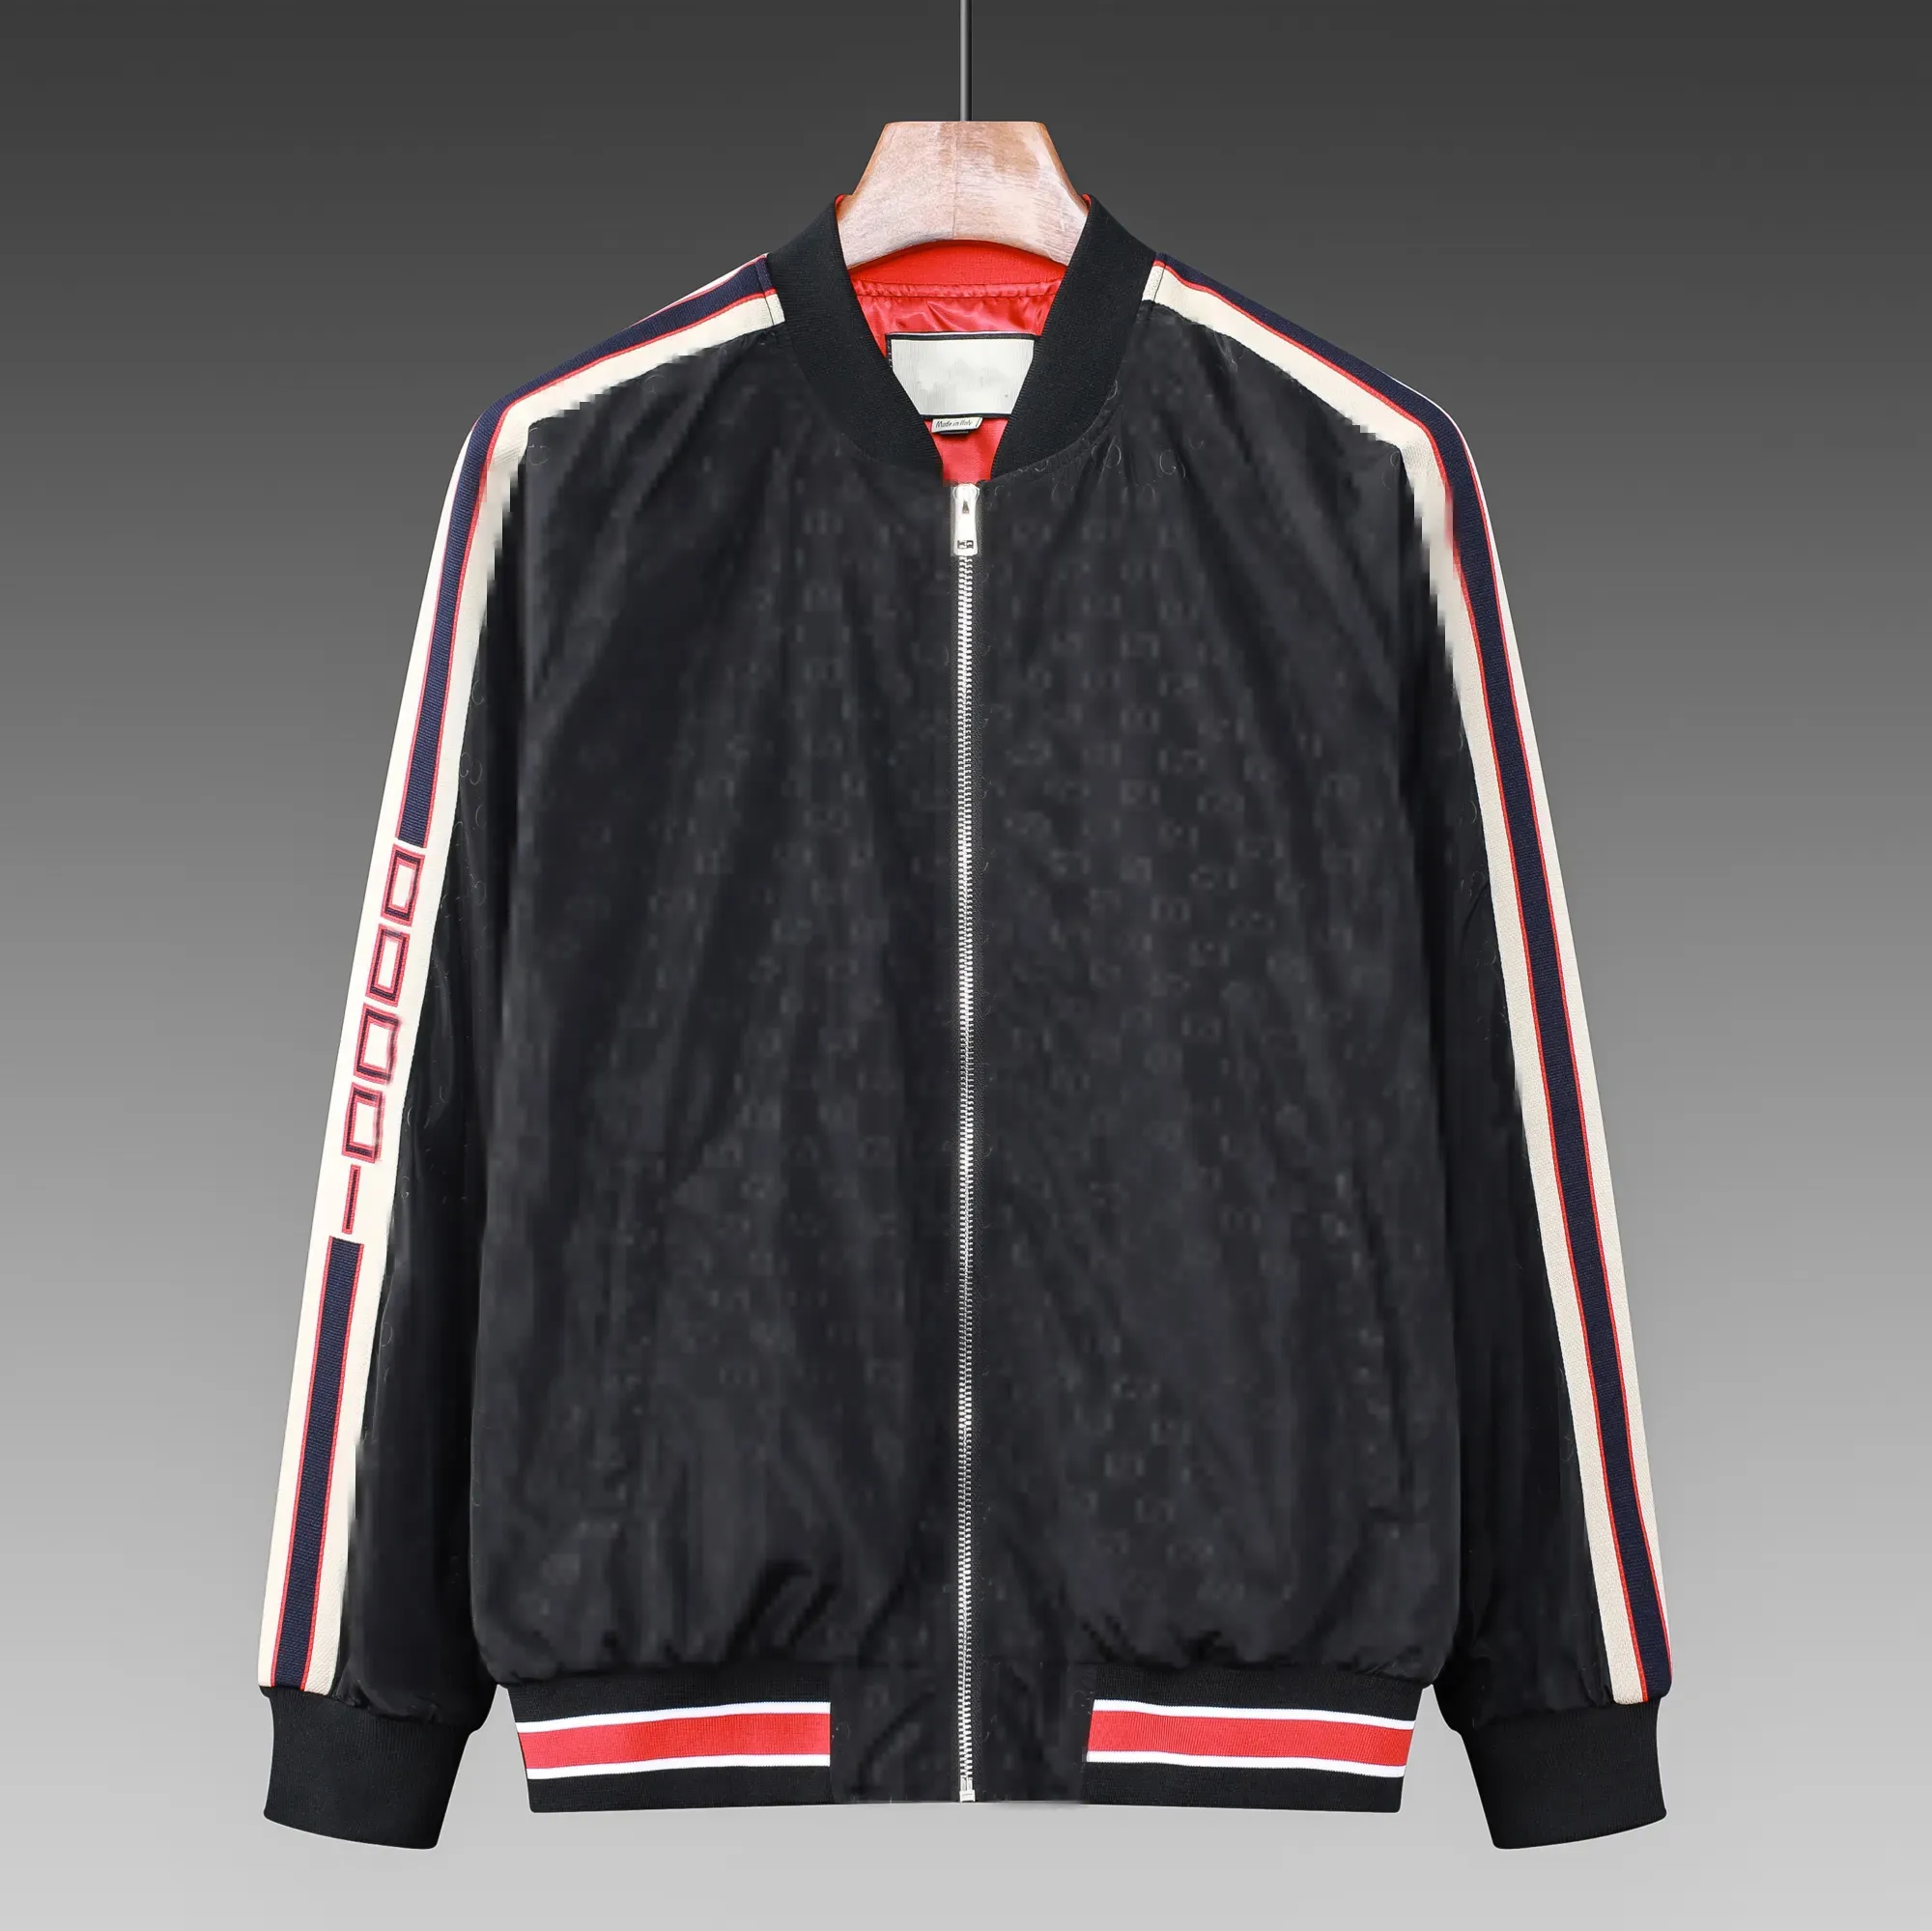 Designer Mens Jacket Spring en Autumn Windrunner Tee Fashion Hooded Sports Breaker Casual Zipper Jackets Clothing M-4XL